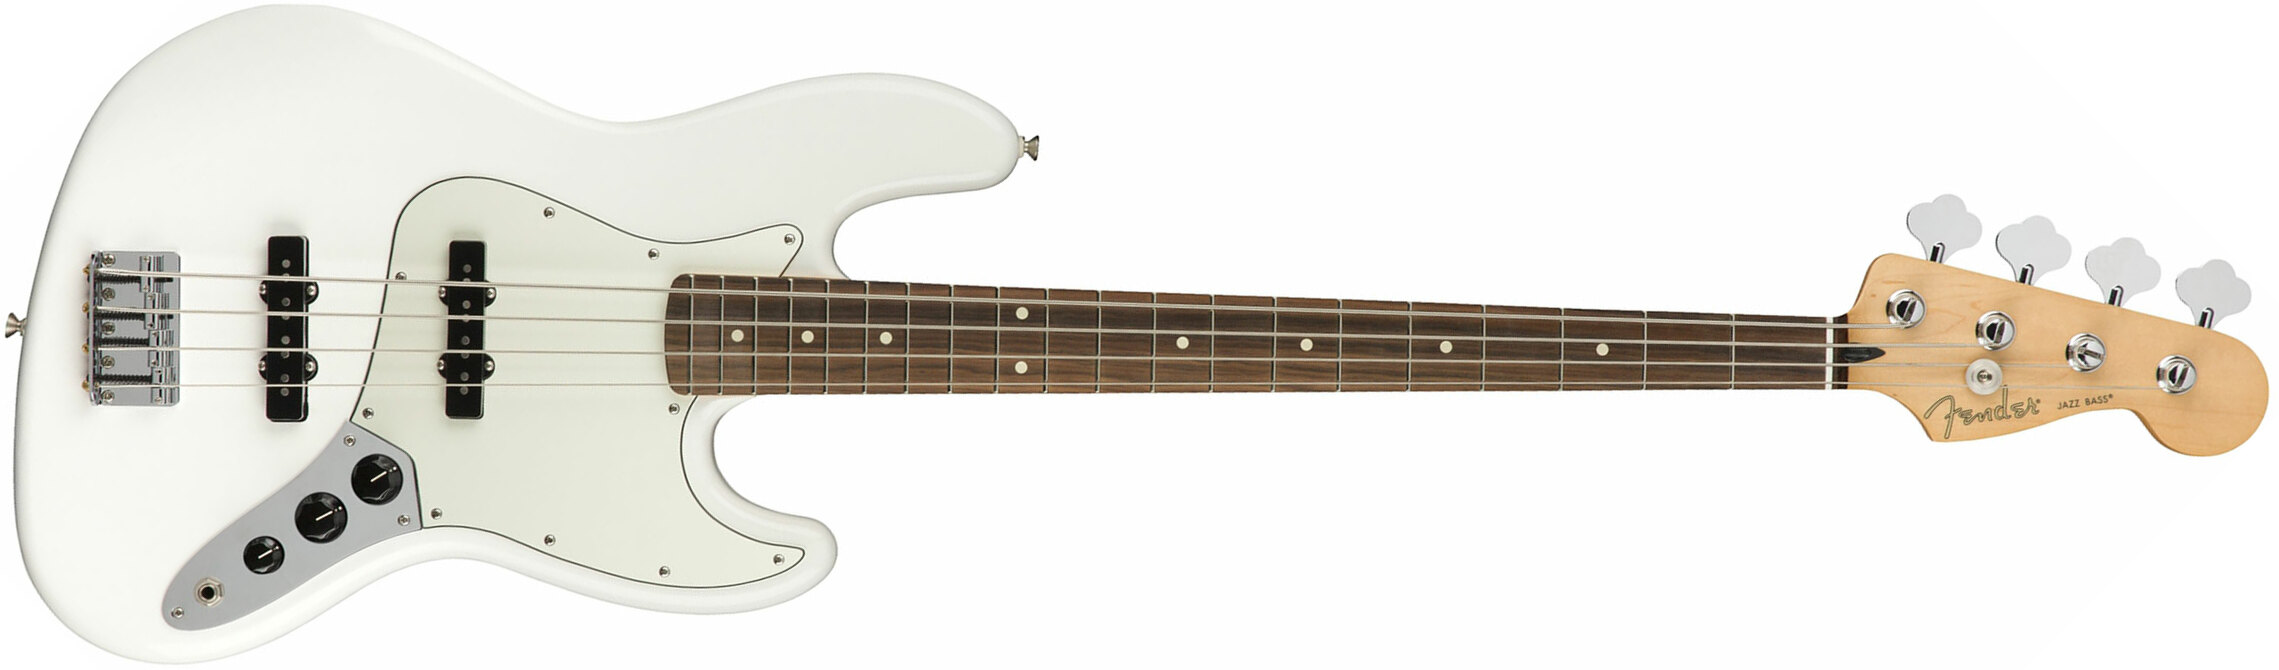 Fender Jazz Bass Player Mex Pf - Polar White - Basse Électrique Solid Body - Main picture